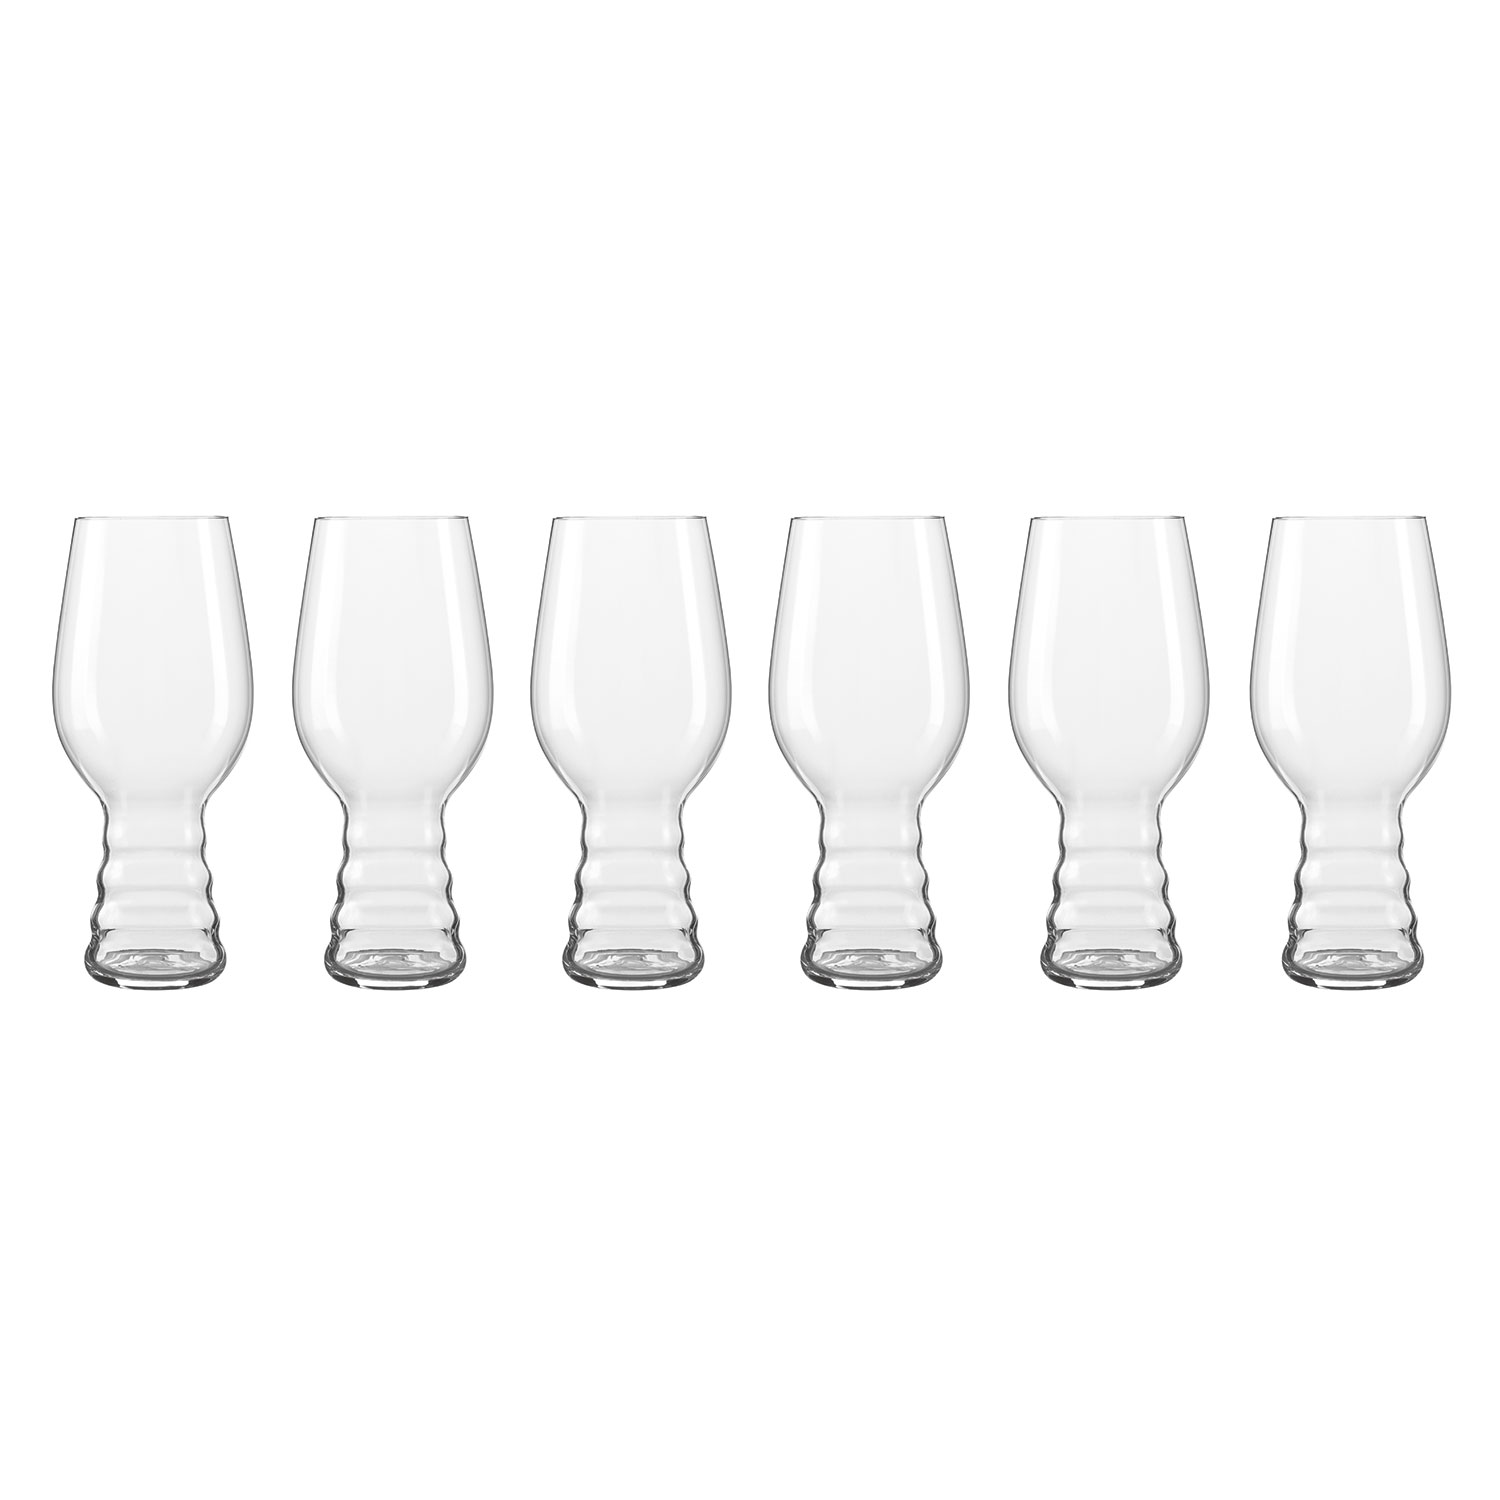 Spiegelau 19.1 oz IPA Glasses, Set of 6 - Drinkware